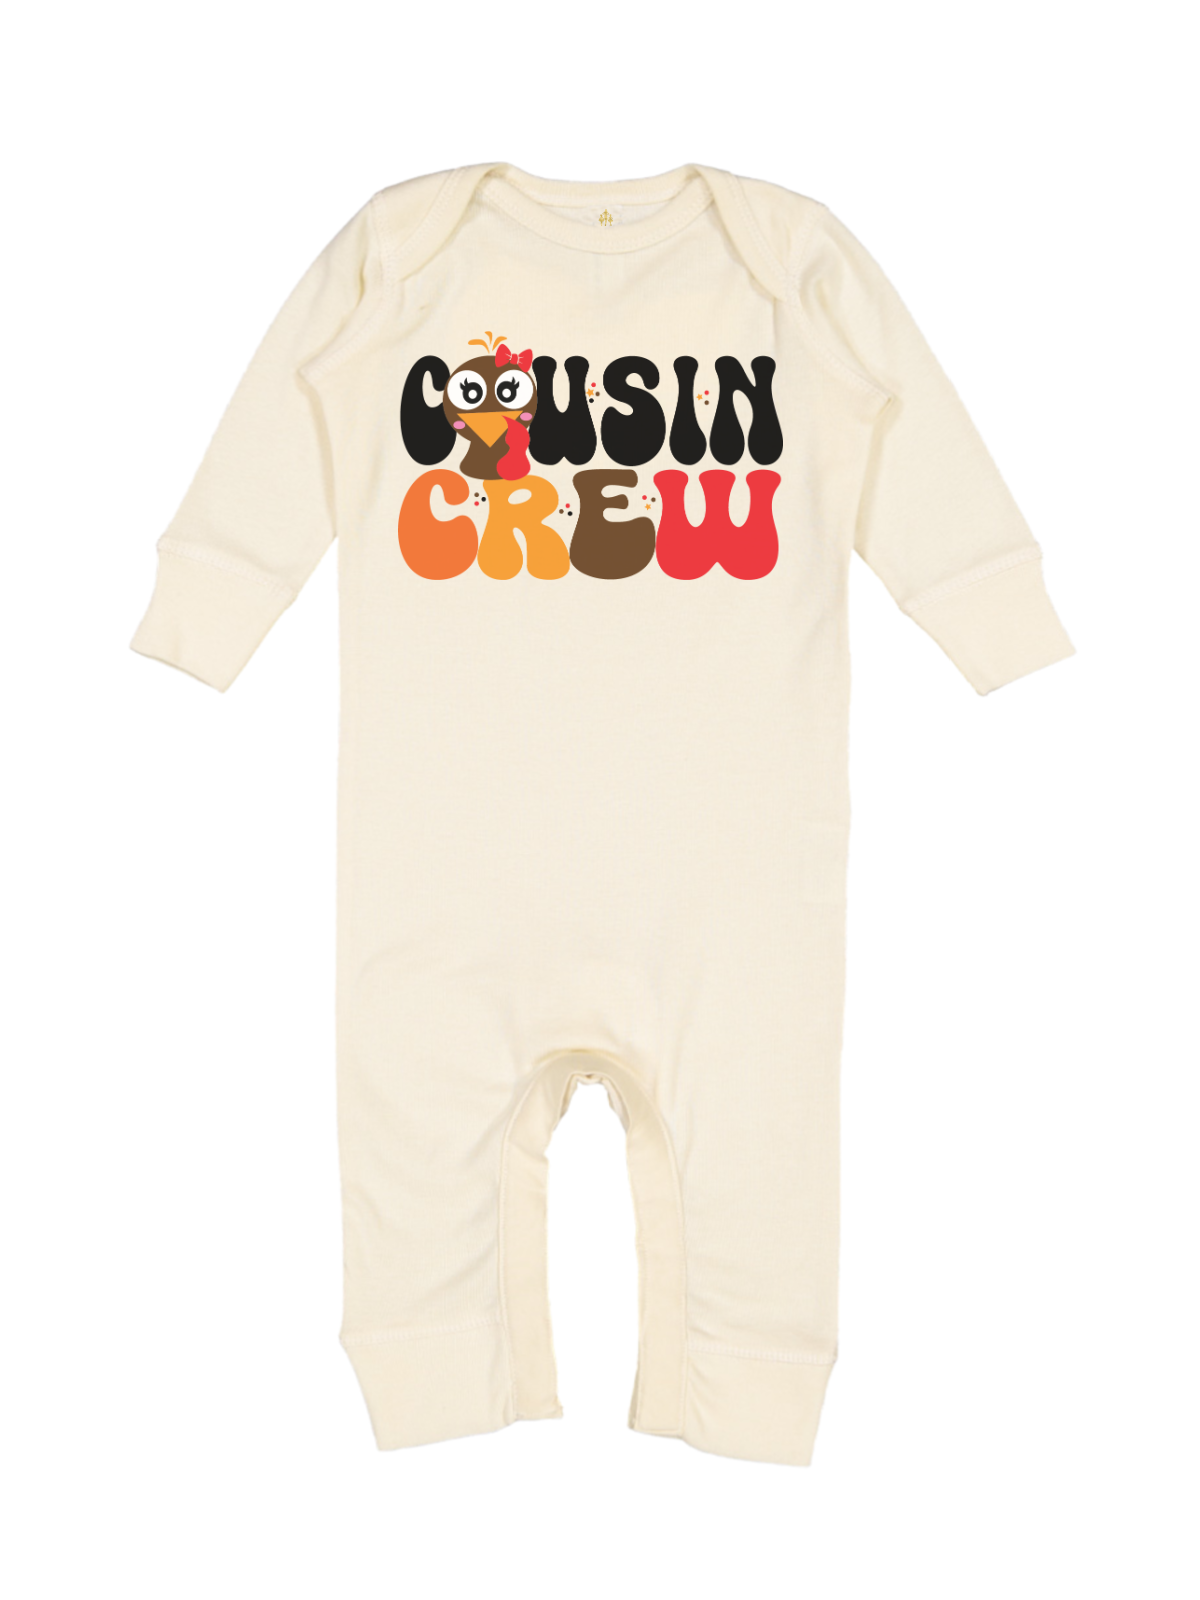 Cousin Crew Baby Girl Thanksgiving Shirt